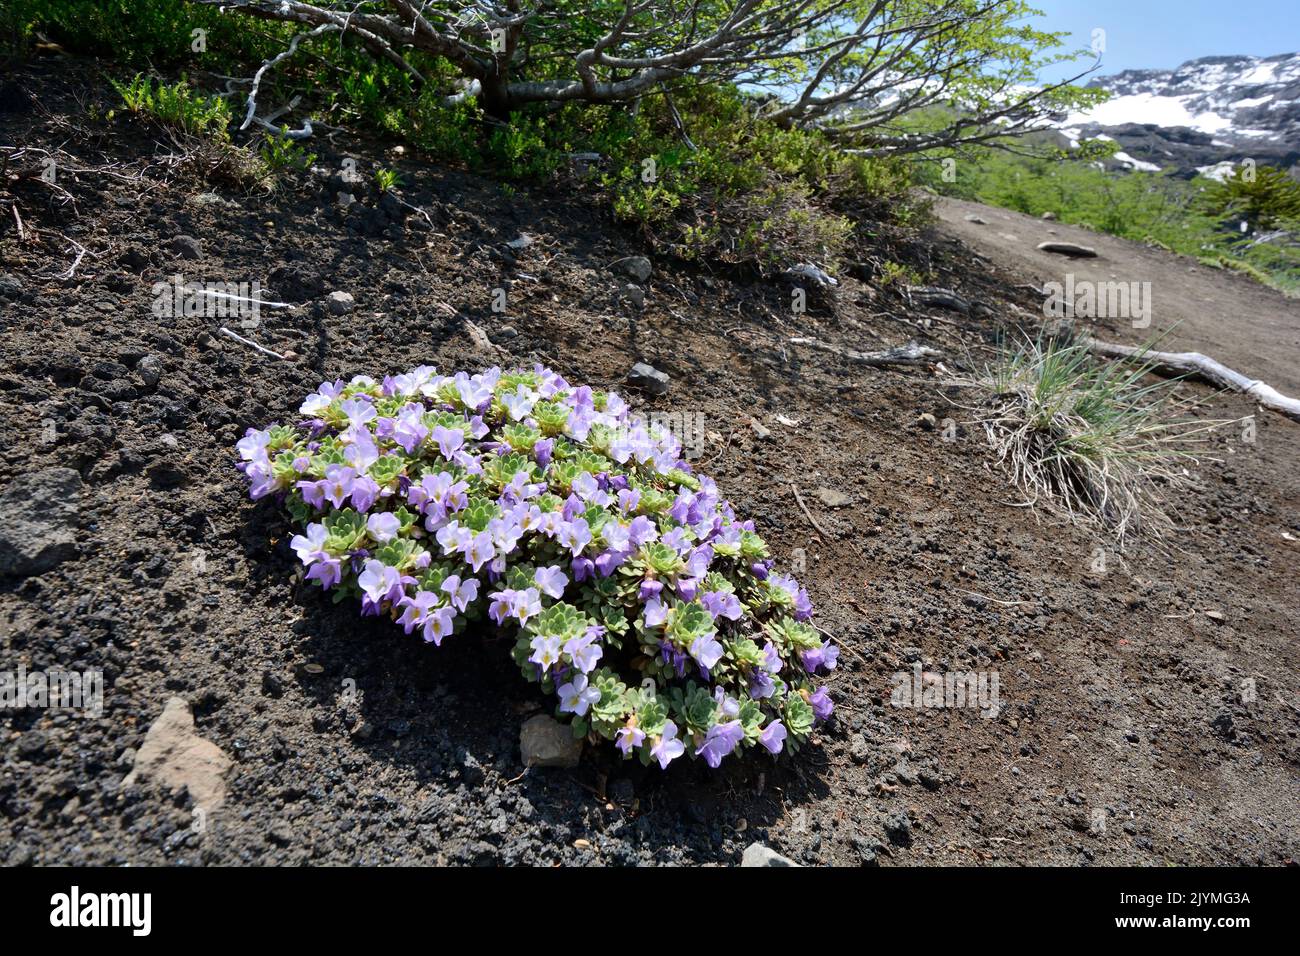 Hierba de corazon (Viola cotyledon), Violaceae native to Chile, summer flowering, Sierra Nevada, Conguillio National Park, Araucania Region, Chile Stock Photo